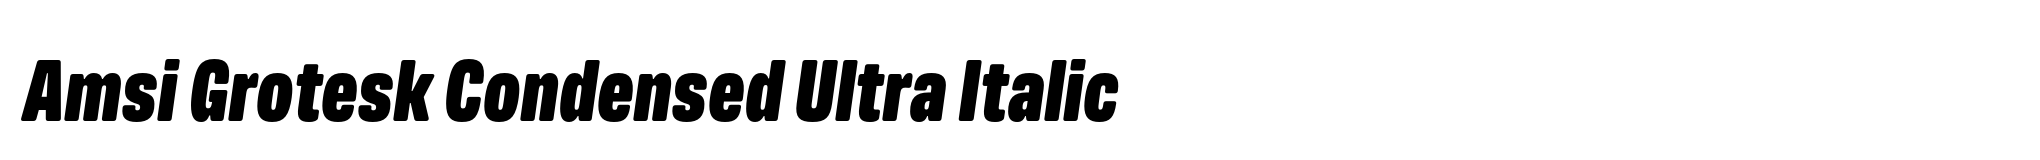 Amsi Grotesk Condensed Ultra Italic image